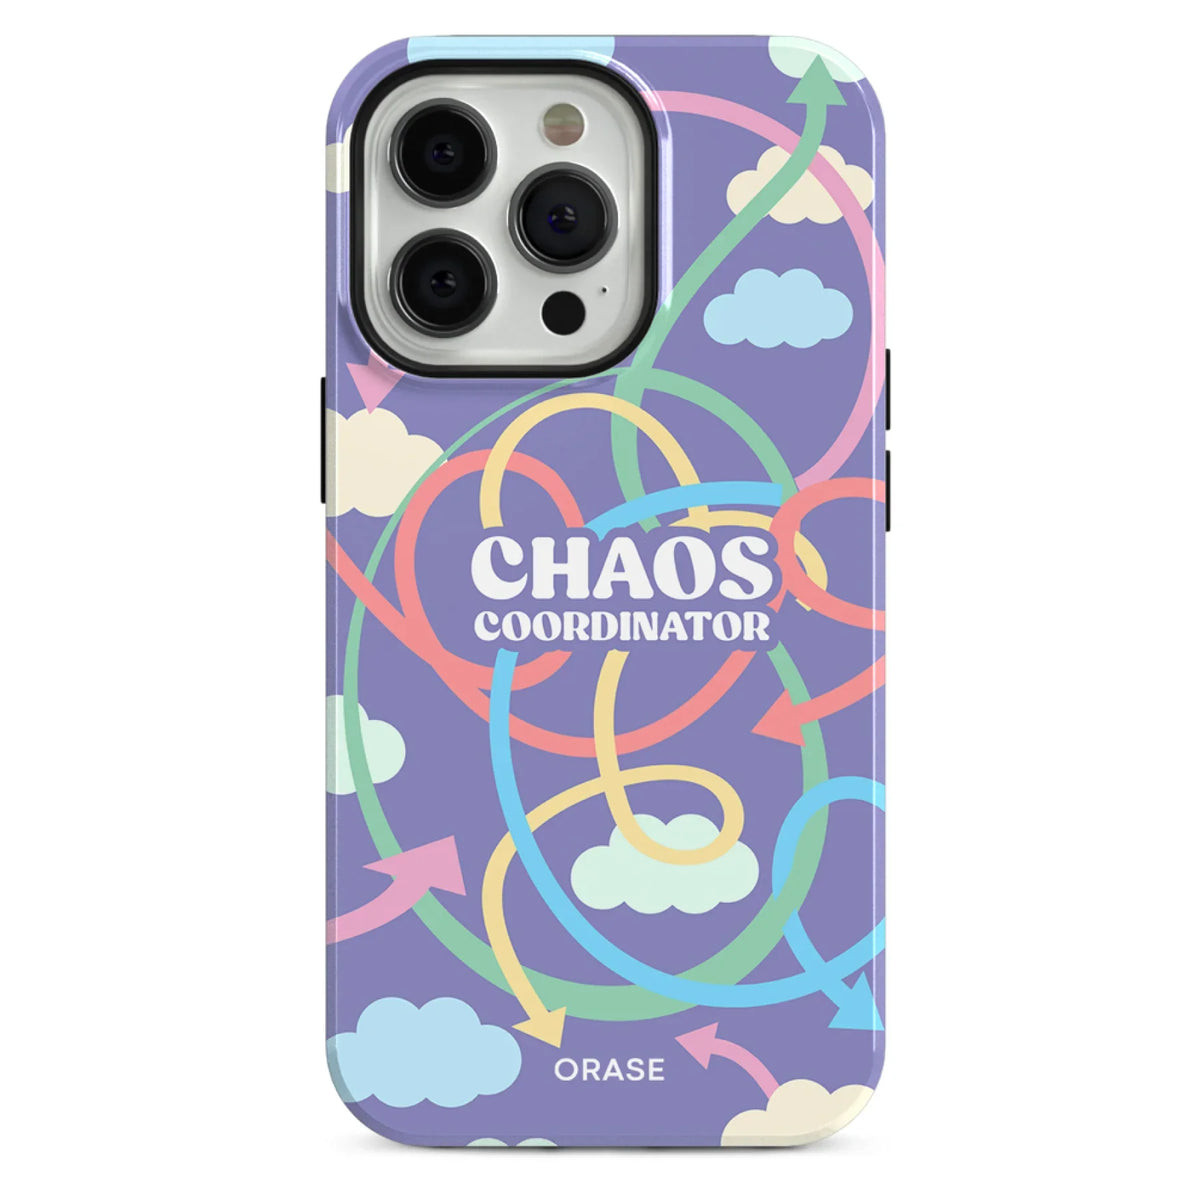 Chaos Coordinator iPhone Case - iPhone 12